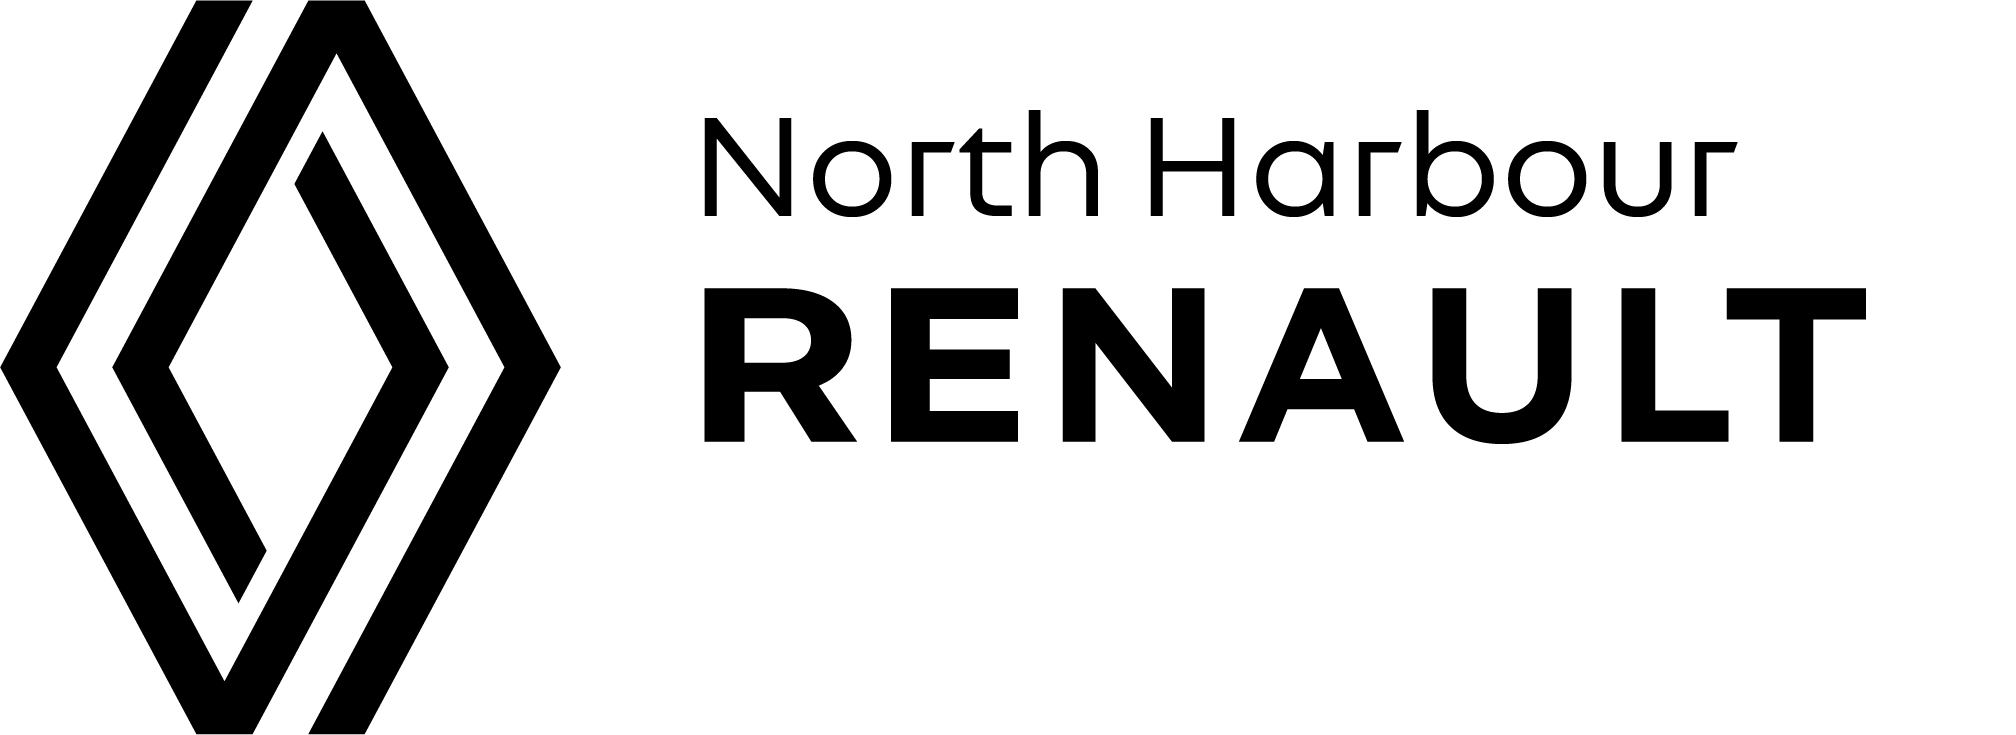 North Harbour Renault